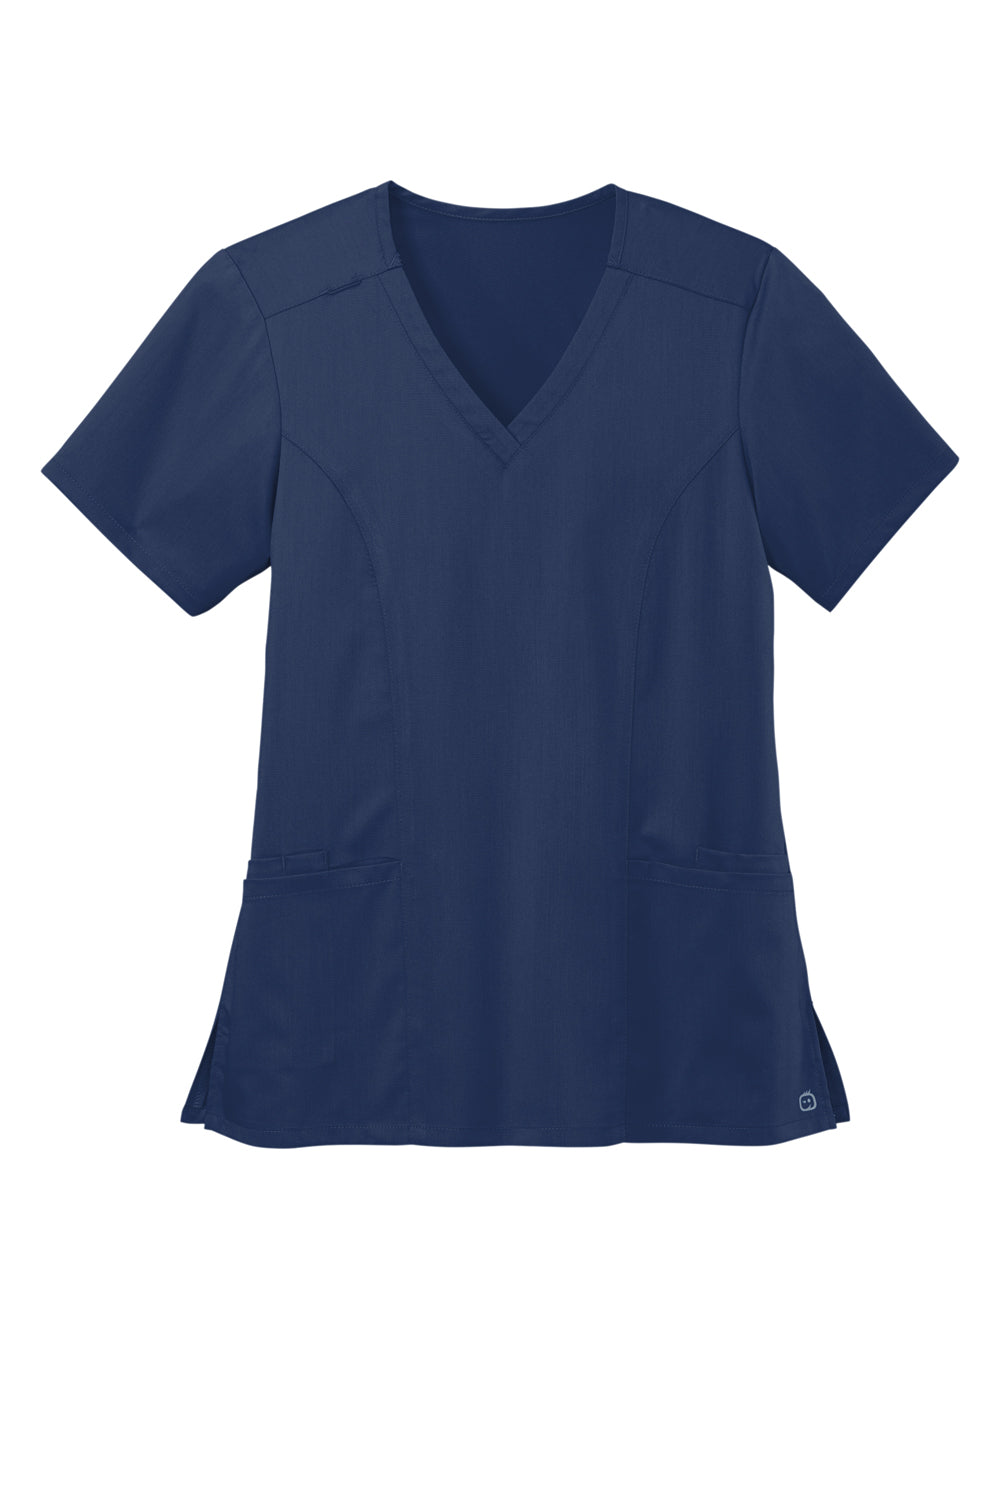 Wonderwink WW4168 Premiere Flex Short Sleeve V-Neck Shirt w/ Pockets Navy Blue Flat Front